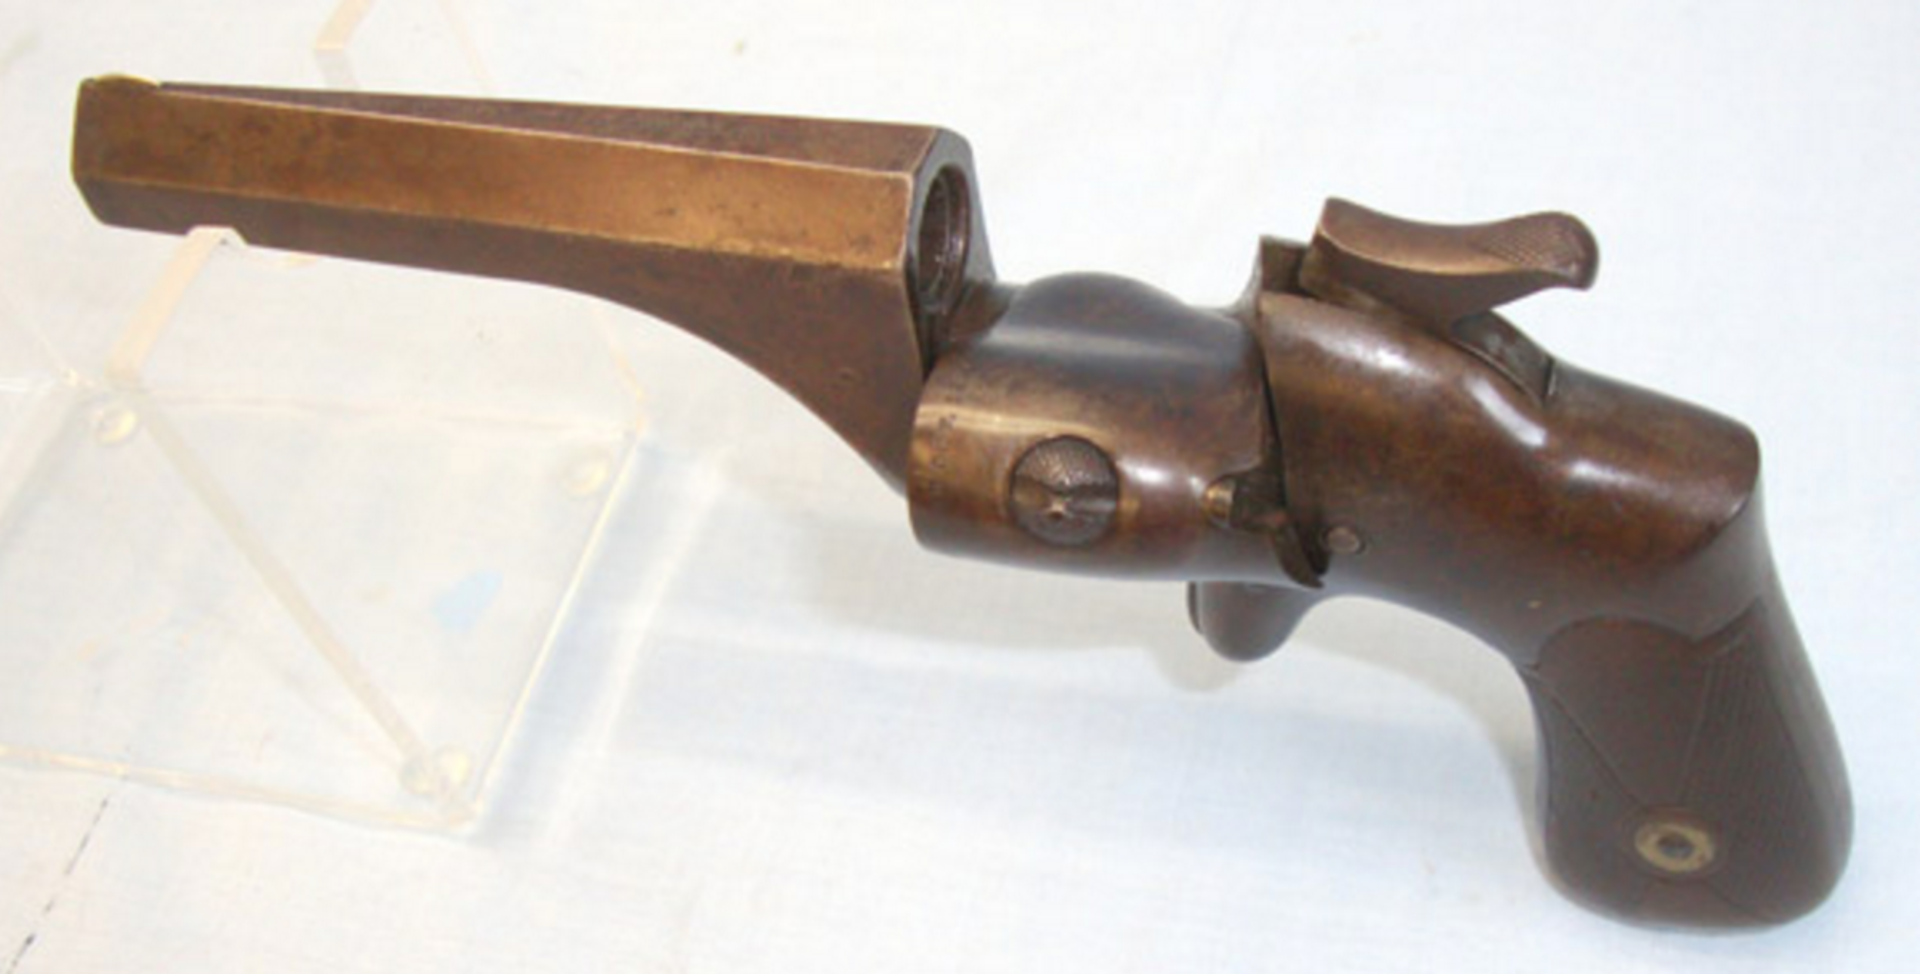 RARE,1865-1868 American Civil War Era, Connecticut Arms & Manufacturing Co,Bulldog Derringer Pistol - Image 2 of 3